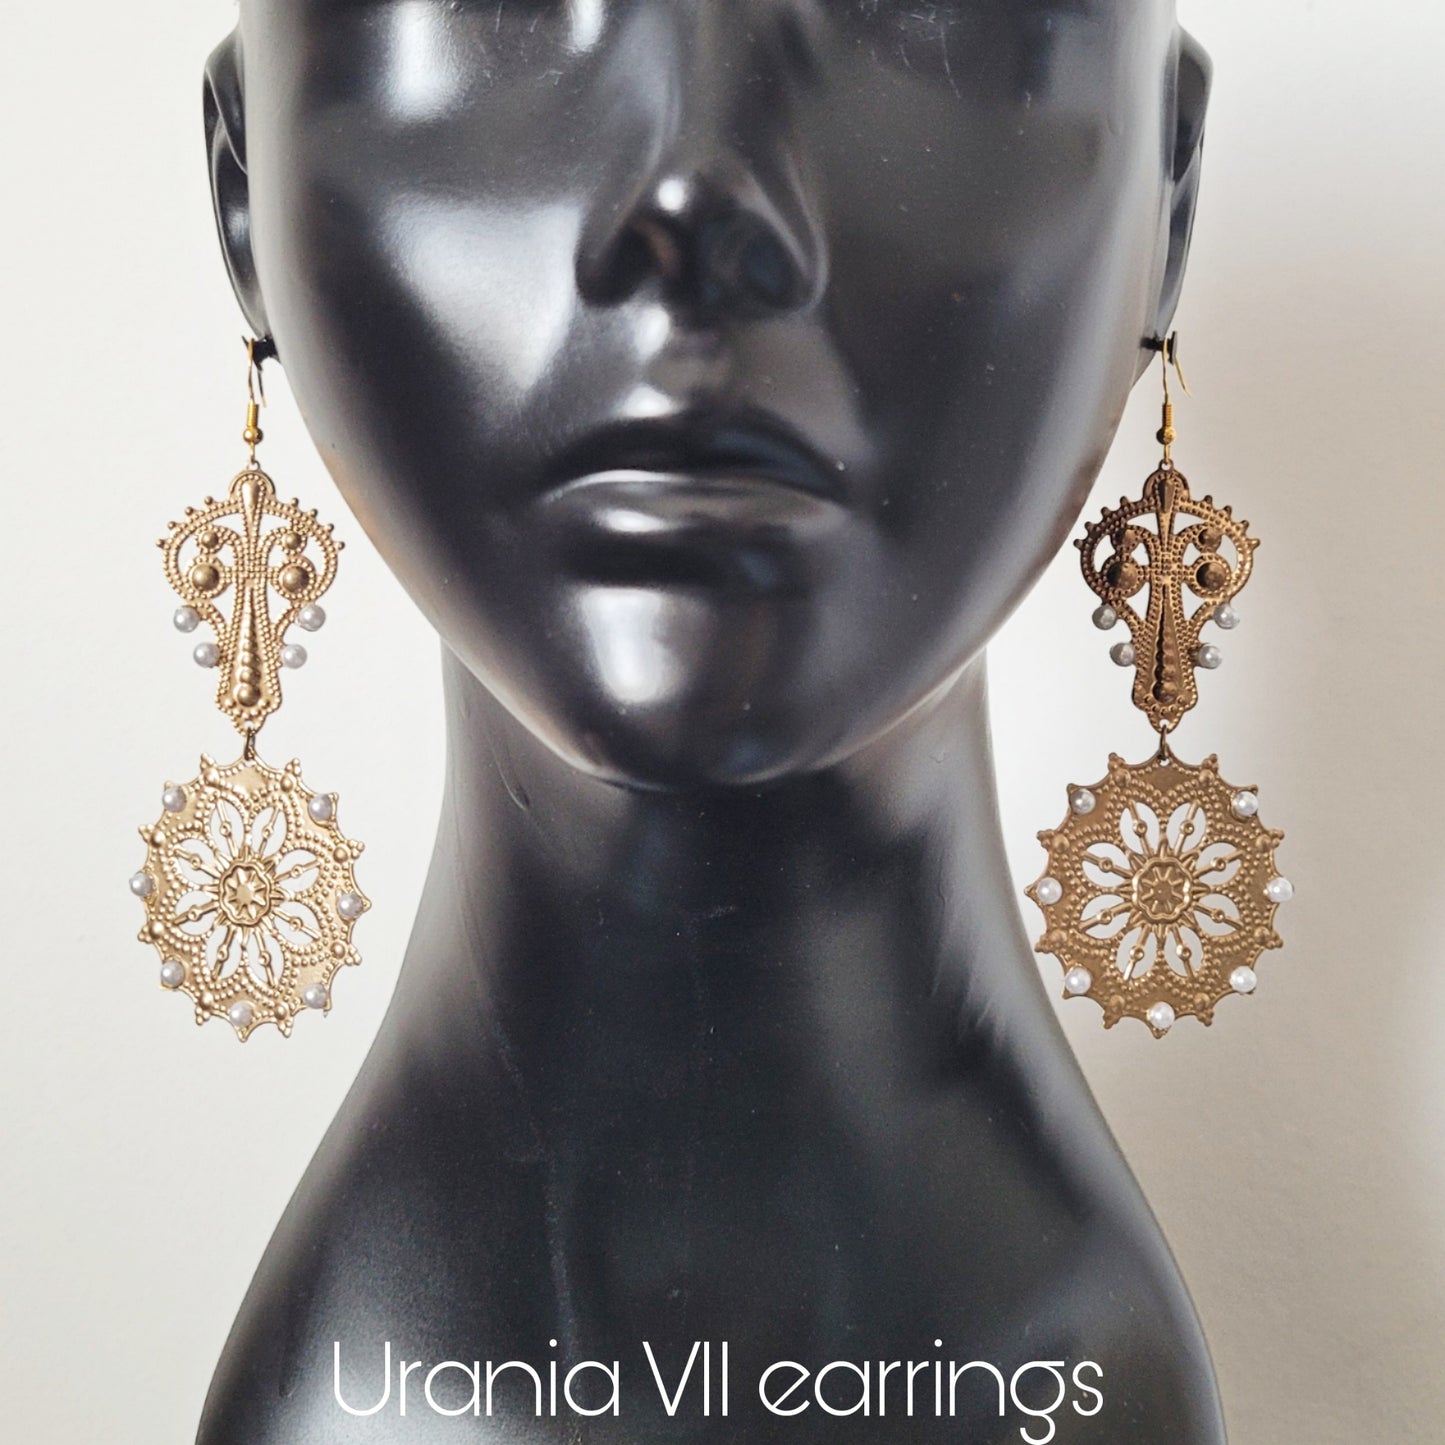 Deusa ex Machina collection: The Urania earrings